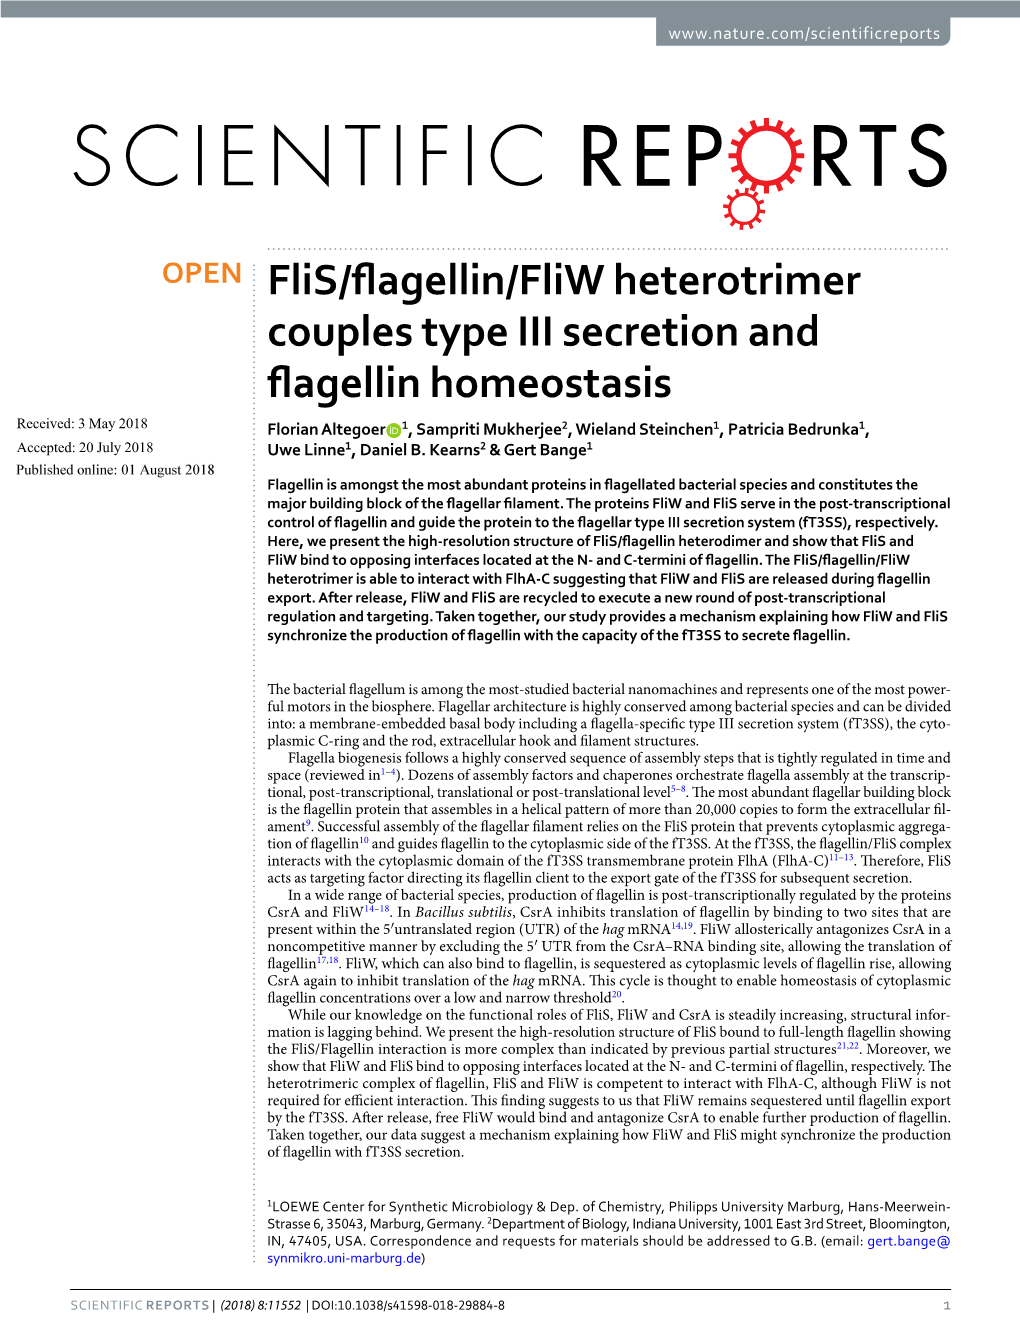 Flis/Flagellin/Fliw Heterotrimer Couples Type III Secretion and Flagellin